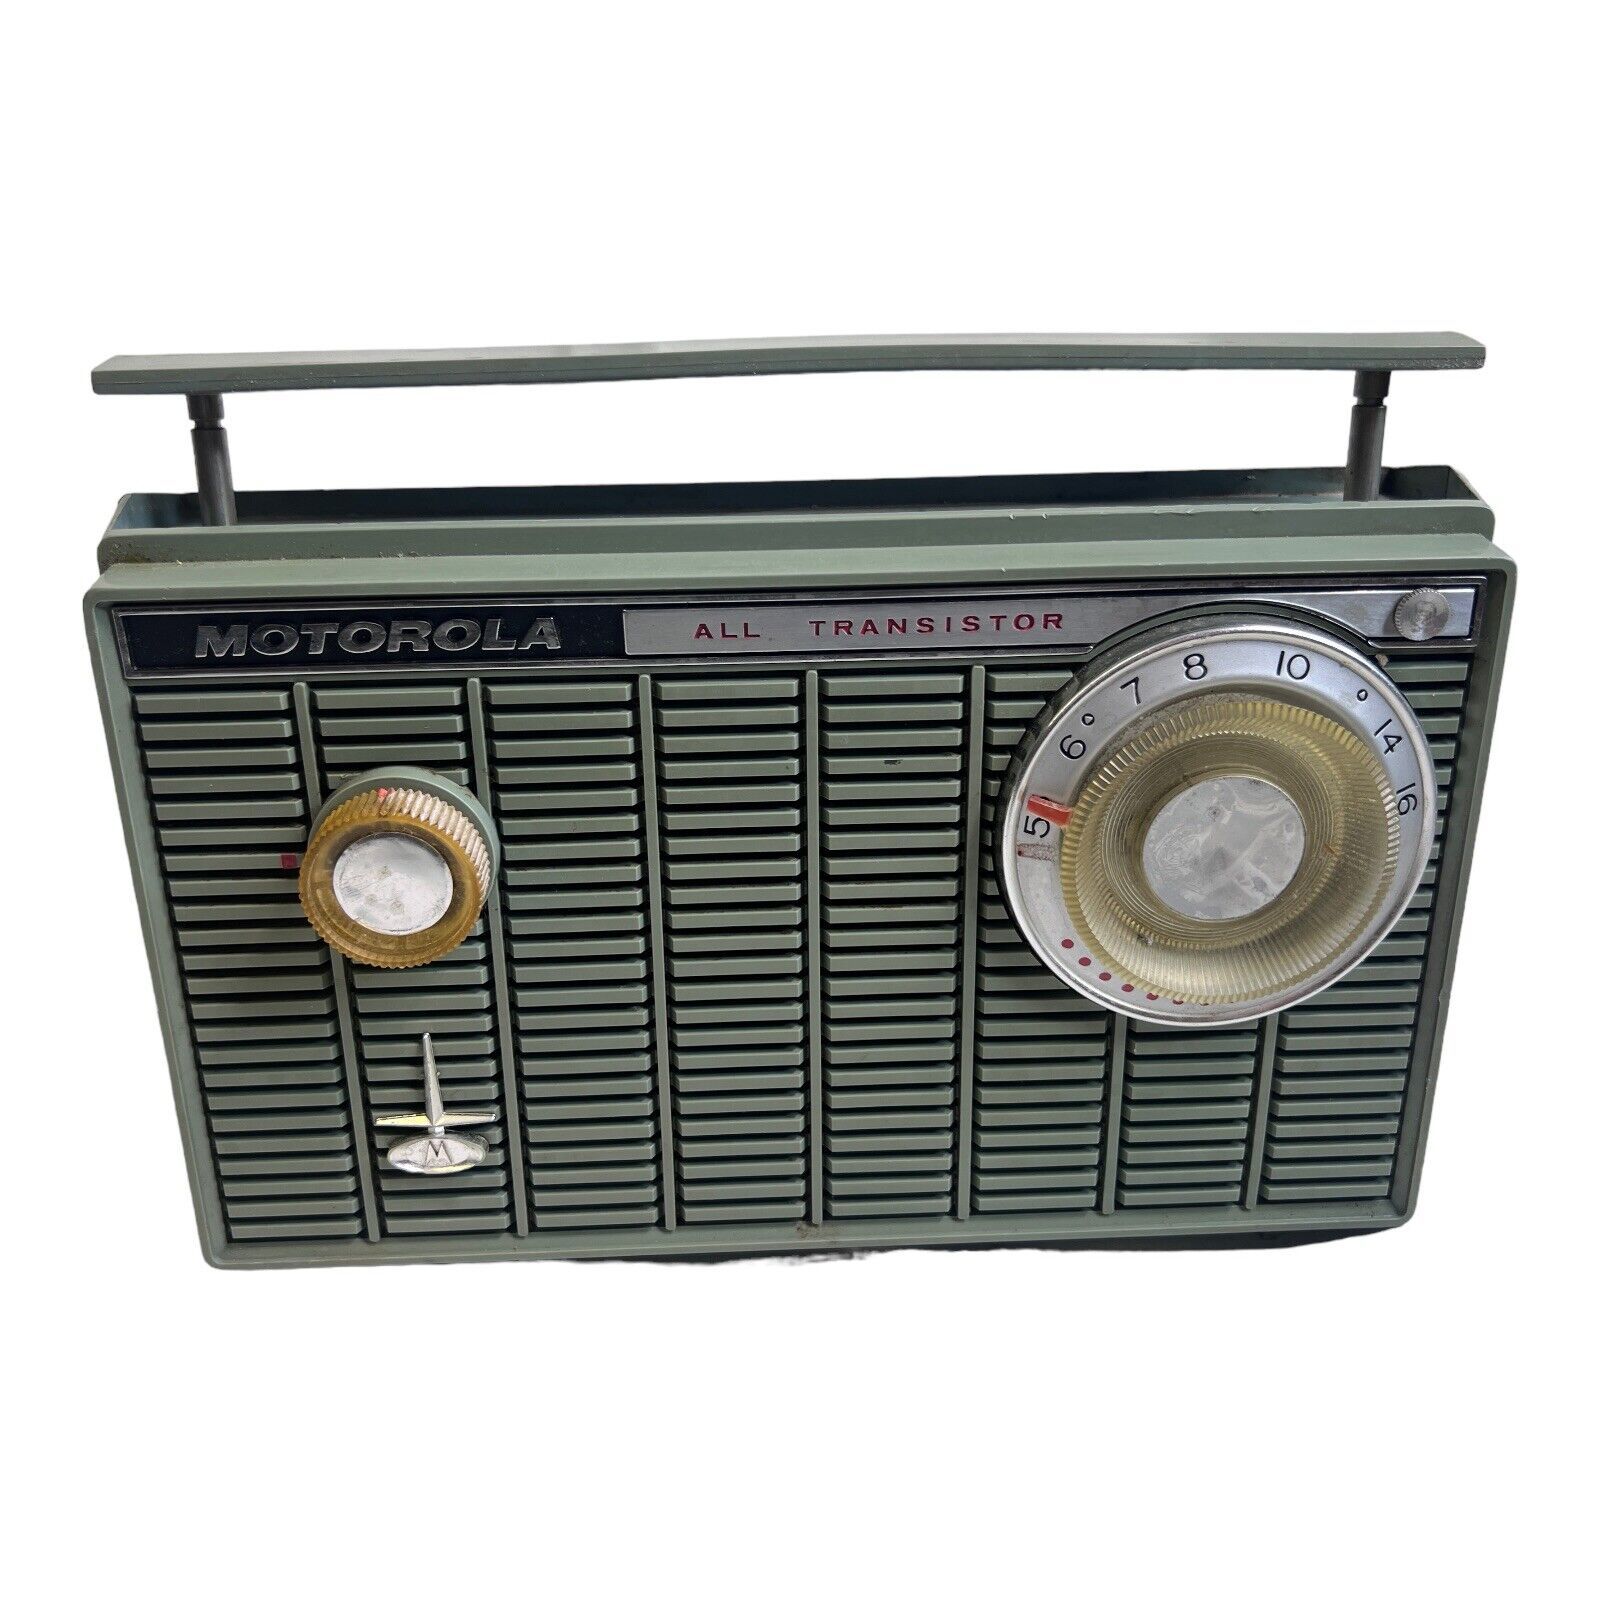 Motorola Battery Operated Transistor Radio w/ Handle - Model XT18B - Working - $79.19